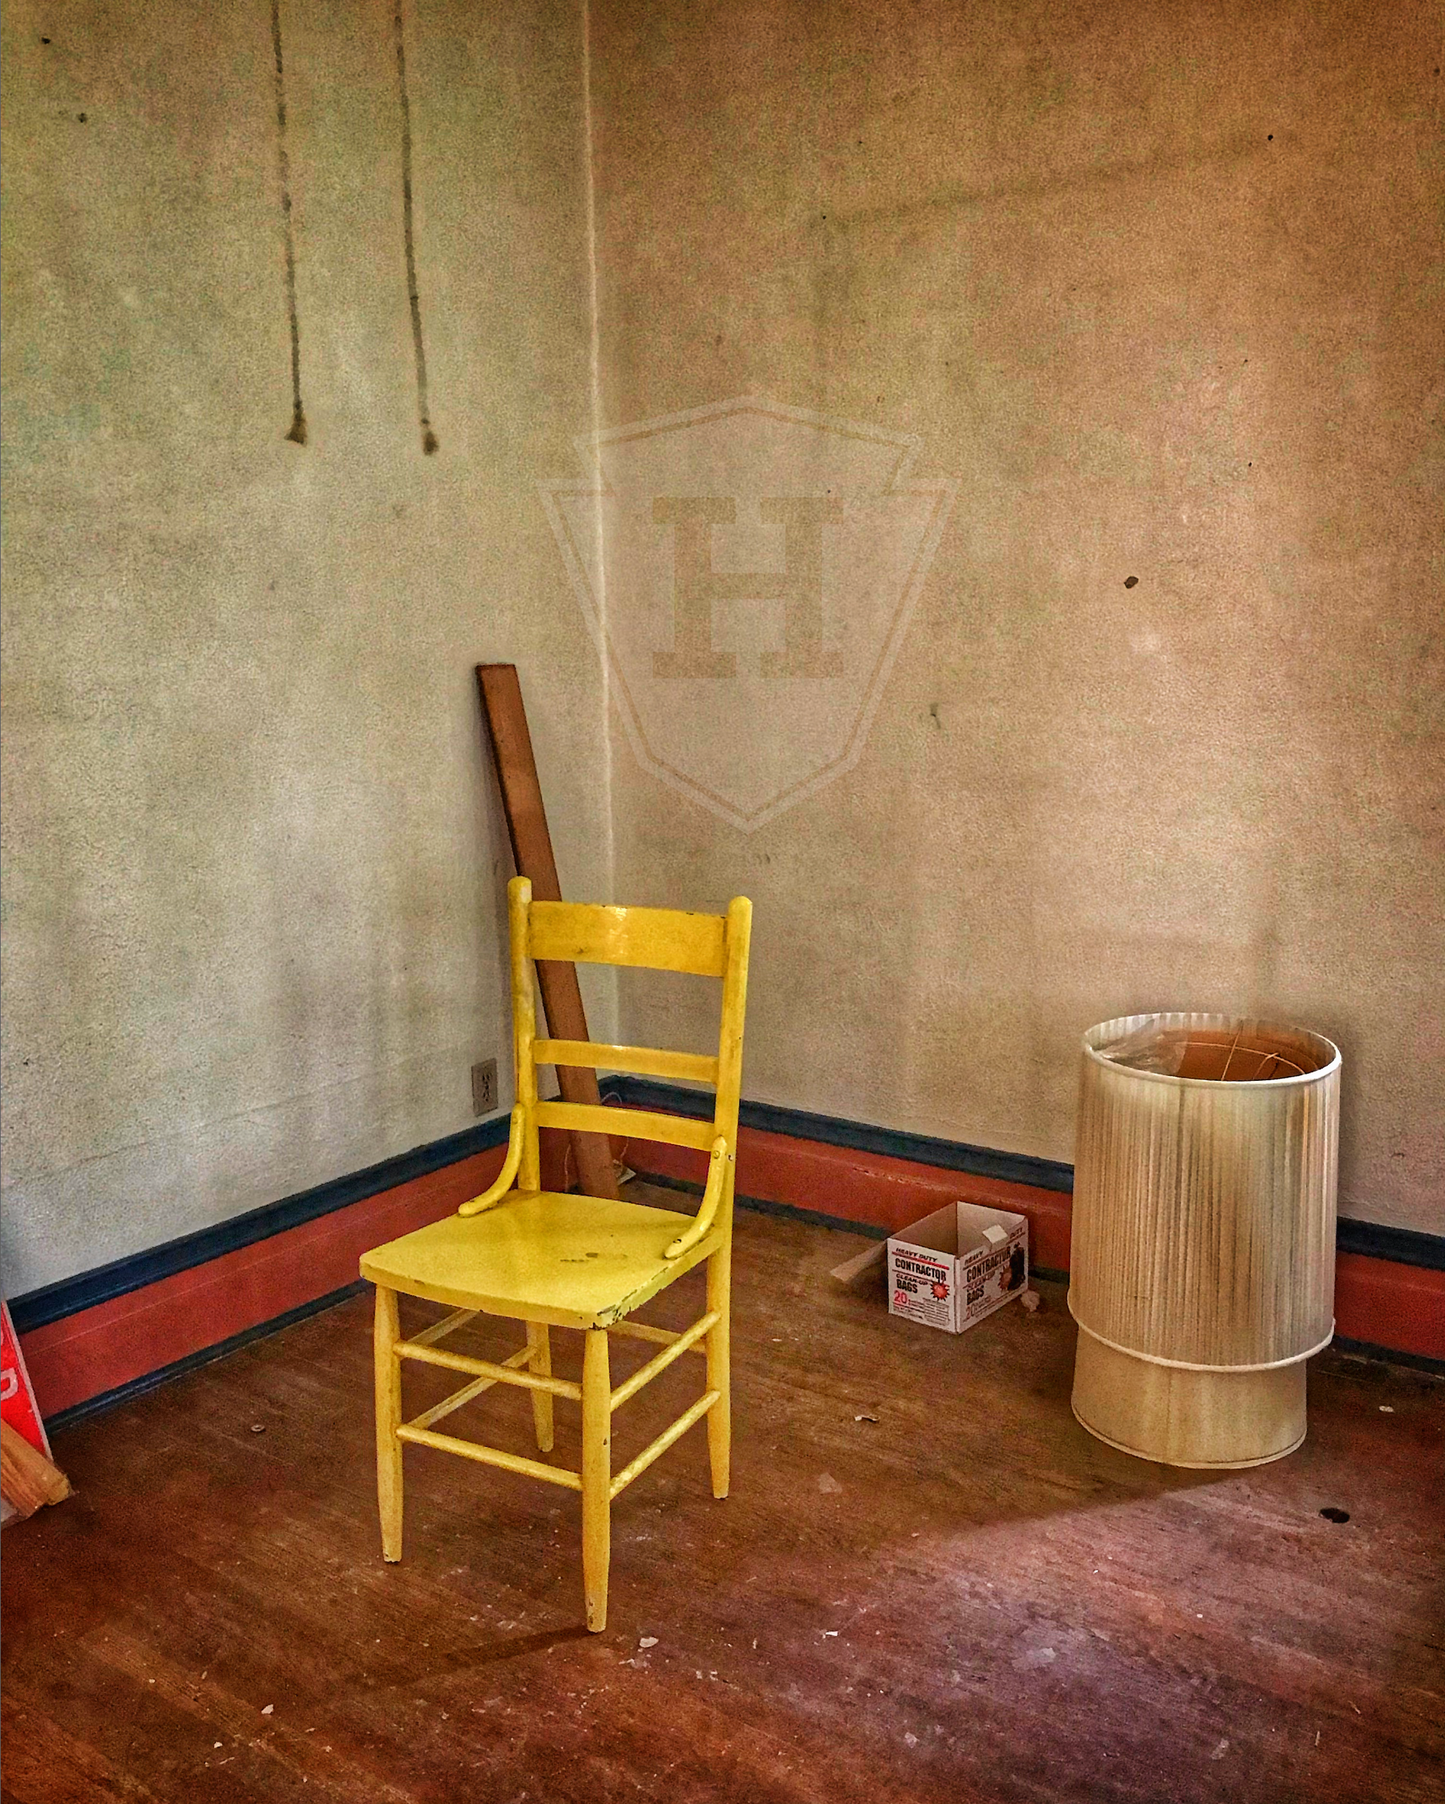 The Yellow Chair - 8x10" Print